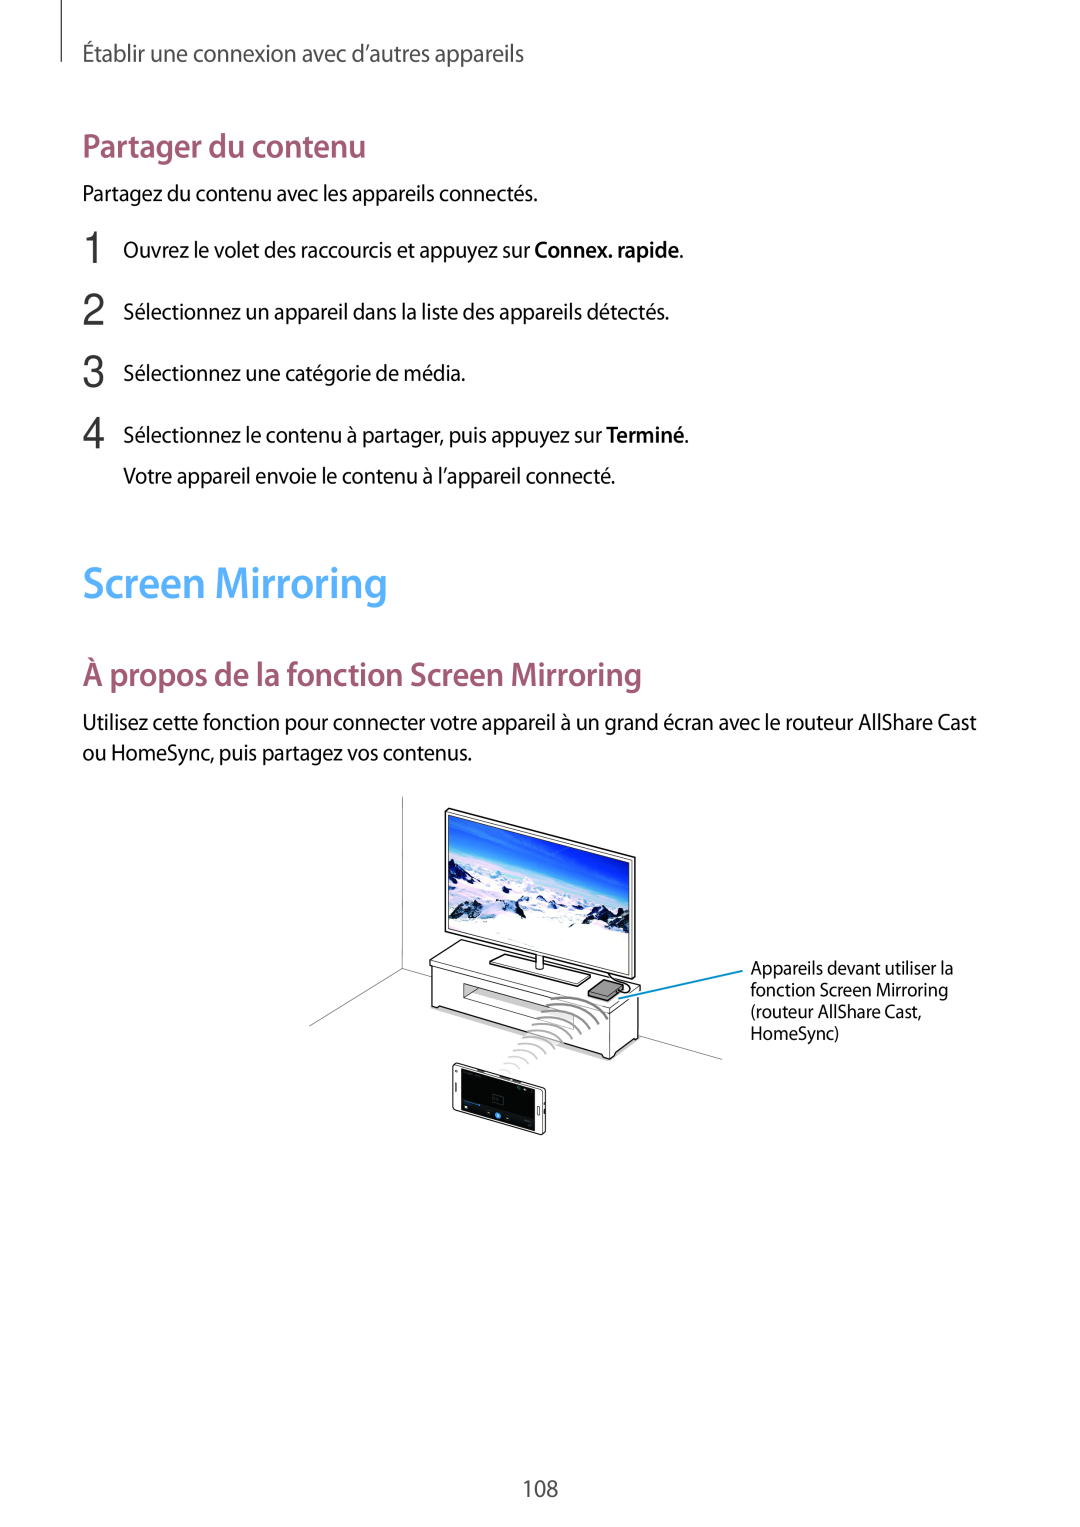 Samsung SM-A700FZKAXEF, SM-A700FZDAXEF, SM-A700FZWAFTM Partager du contenu, À propos de la fonction Screen Mirroring 